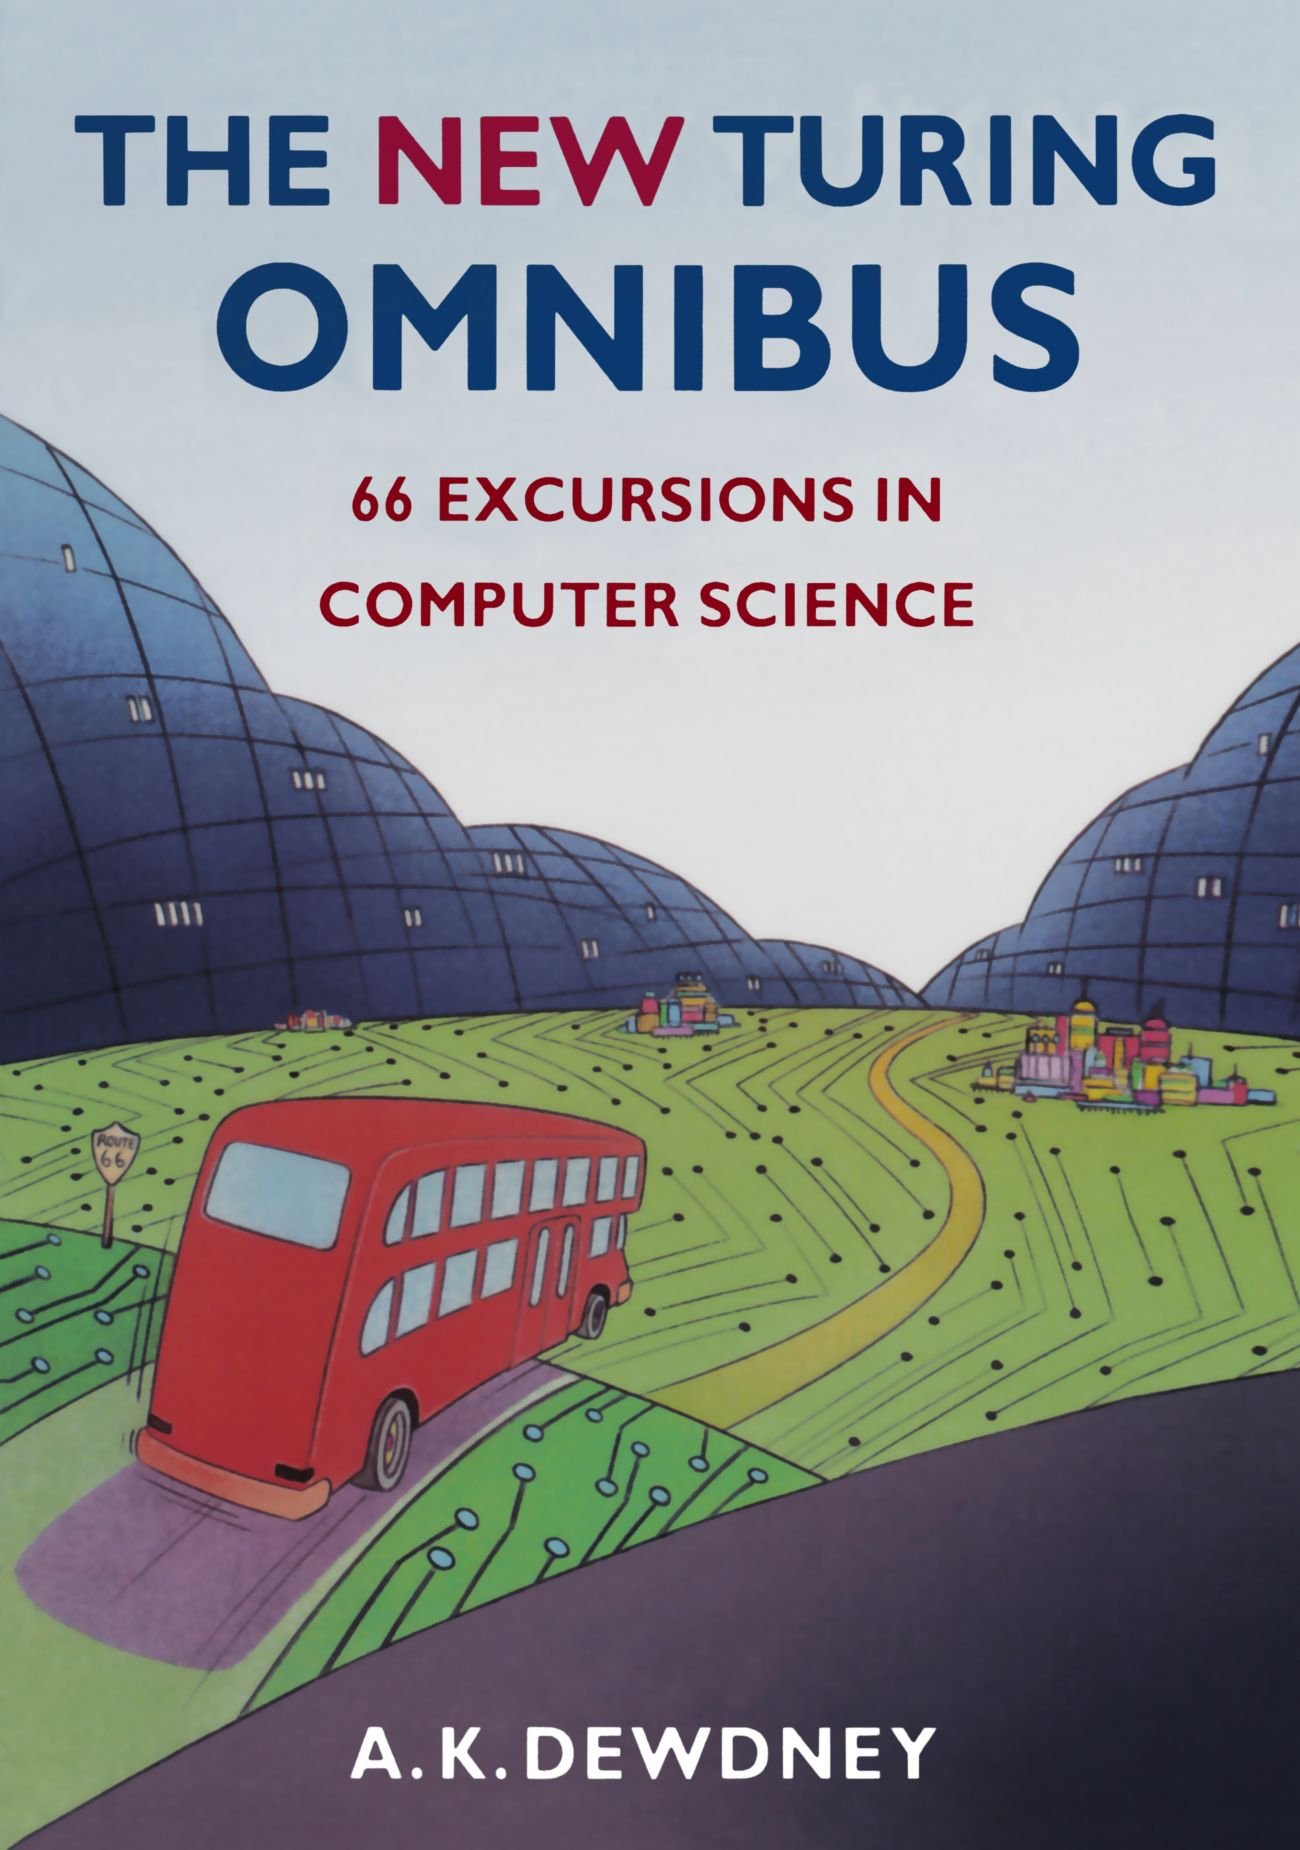 The New Turing Omnibus